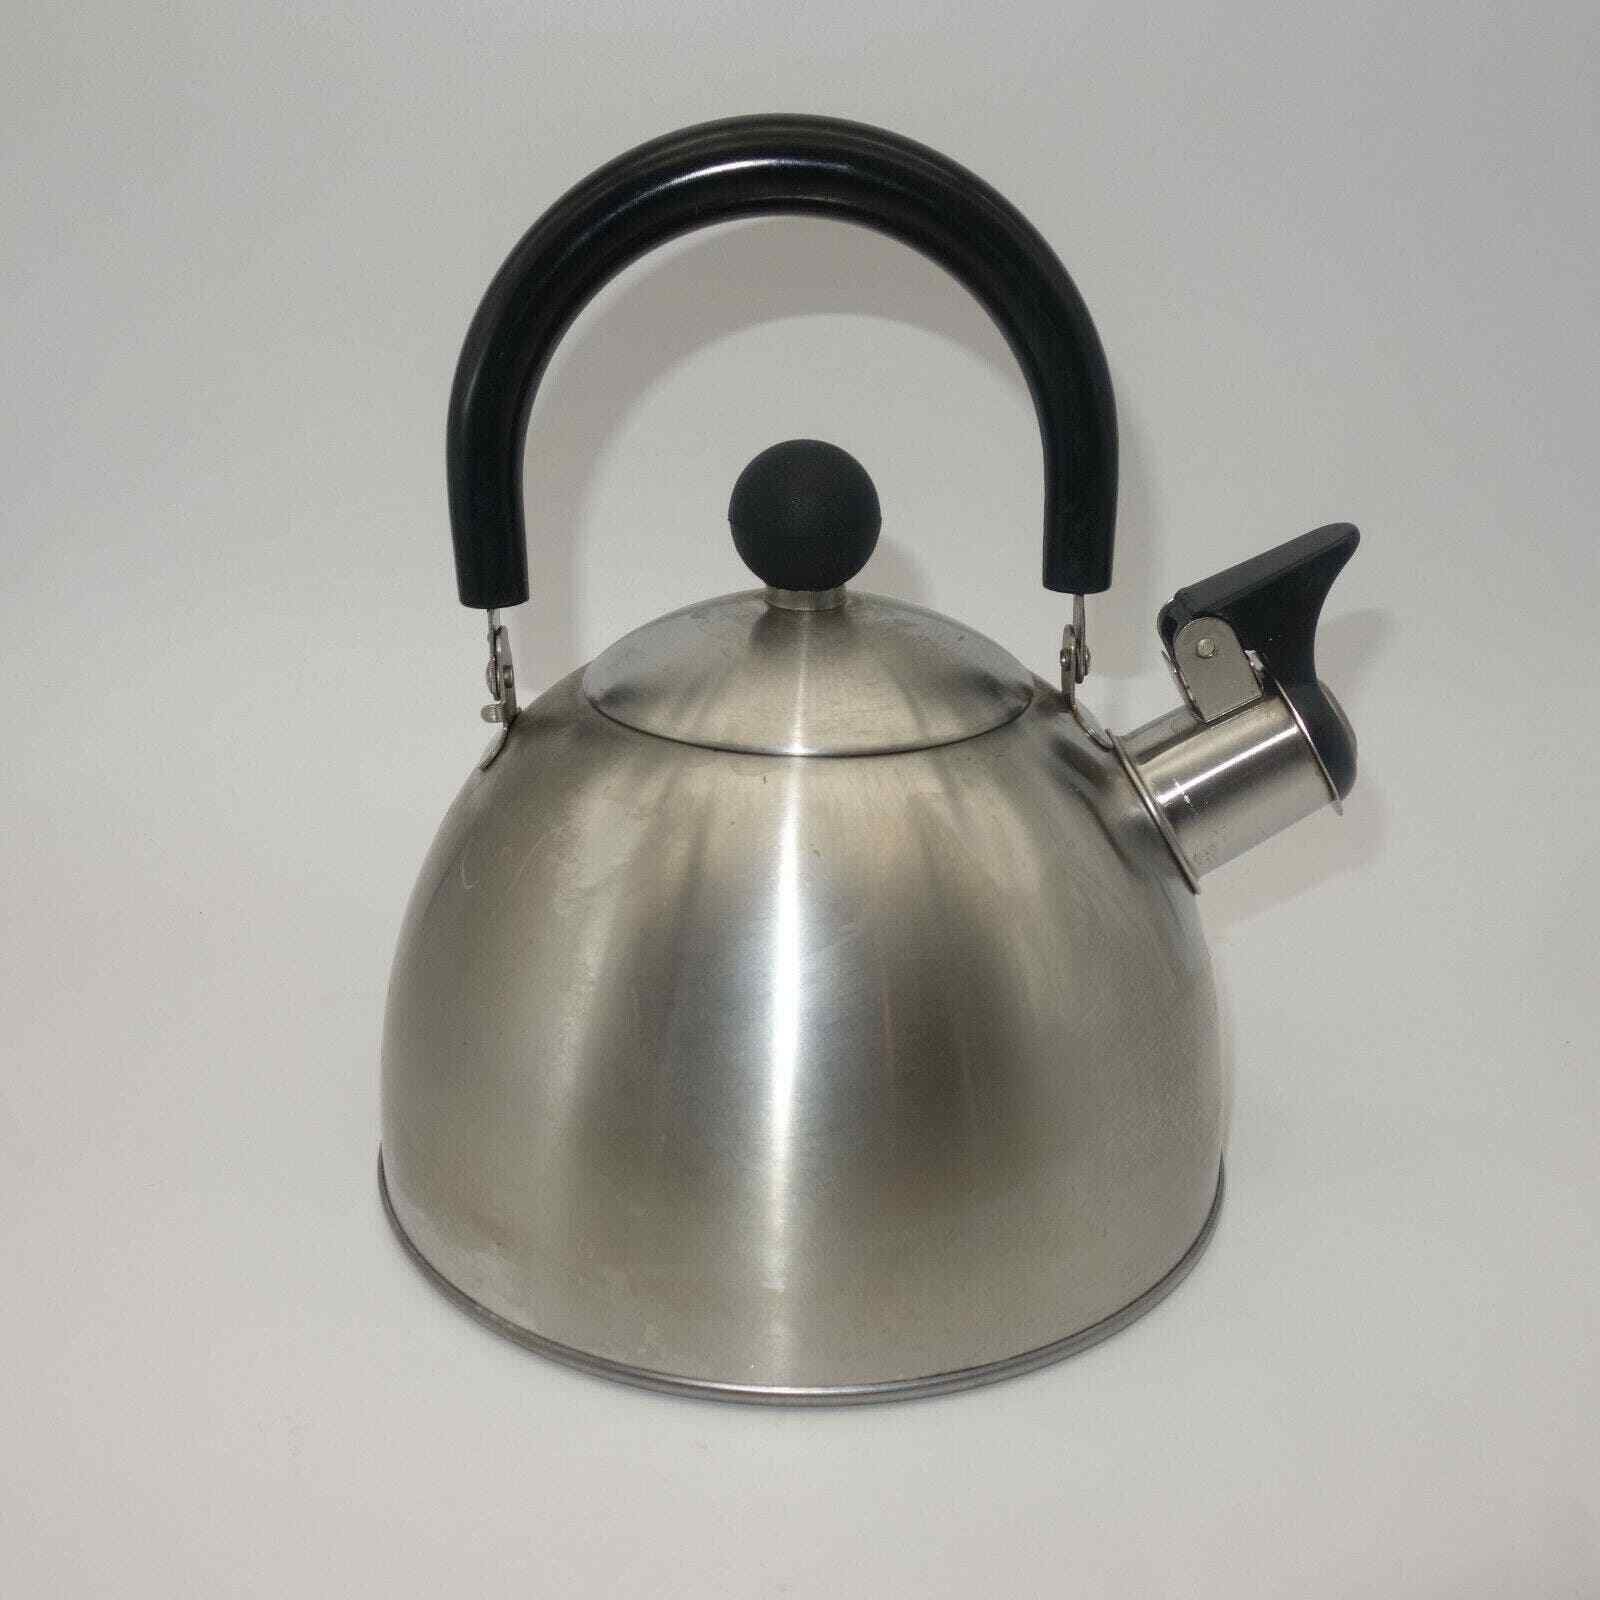 Vintage COPCO Whistling Tea Kettle Teapot Shiny Stainless Steel 1.5 Quart